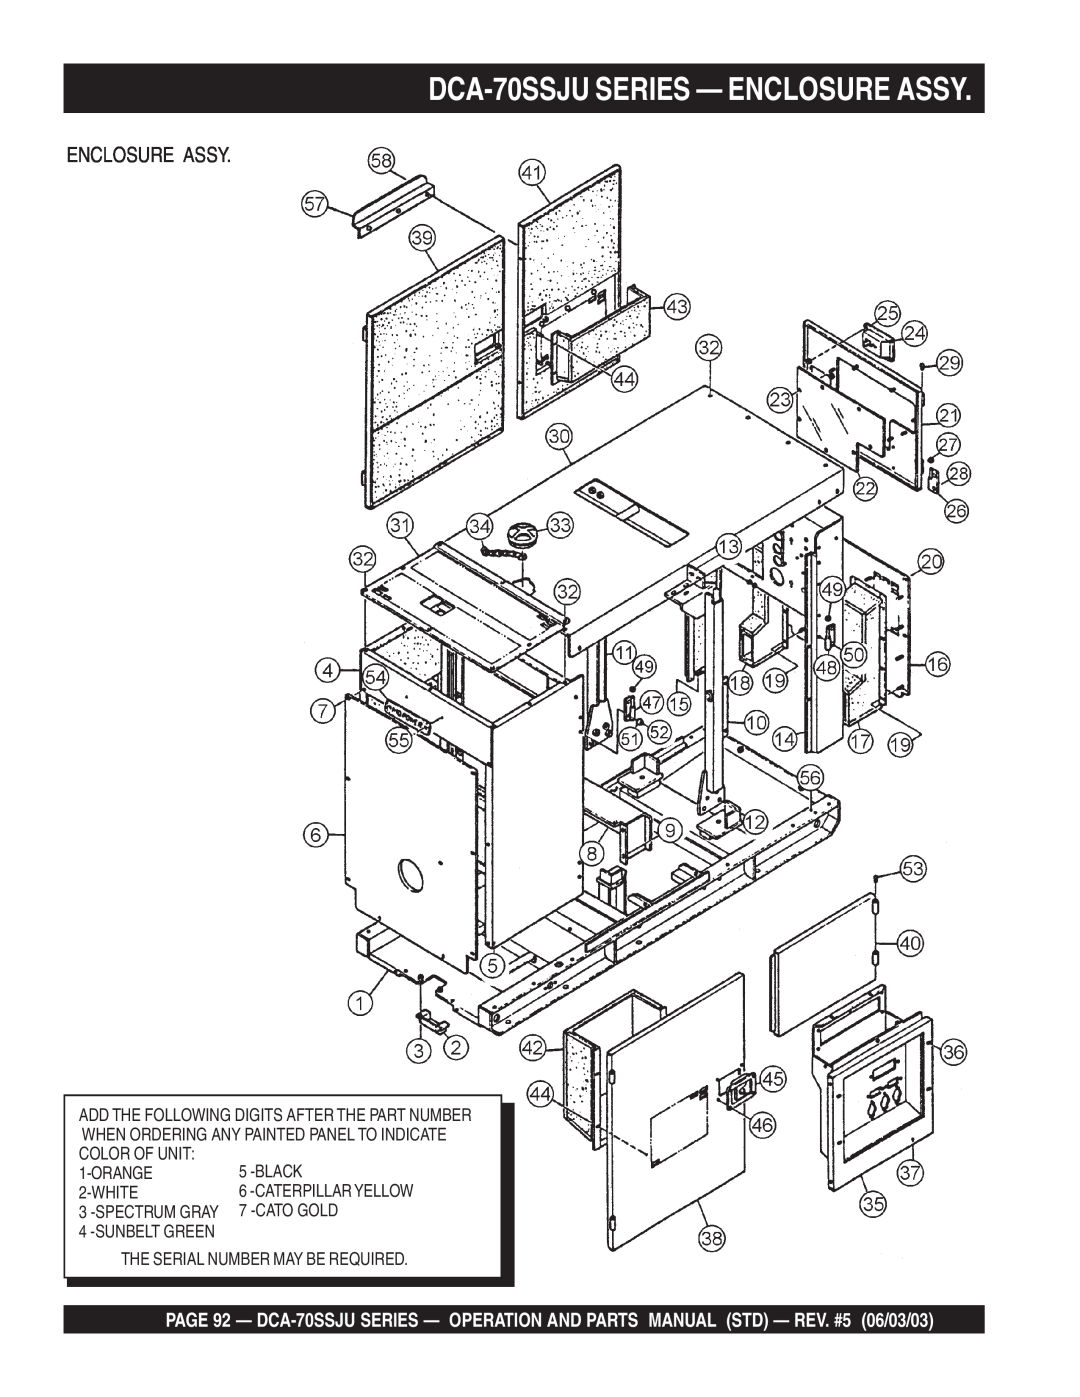 Multiquip operation manual DCA-70SSJUSERIES — ENCLOSURE ASSY, Enclosure Assy 